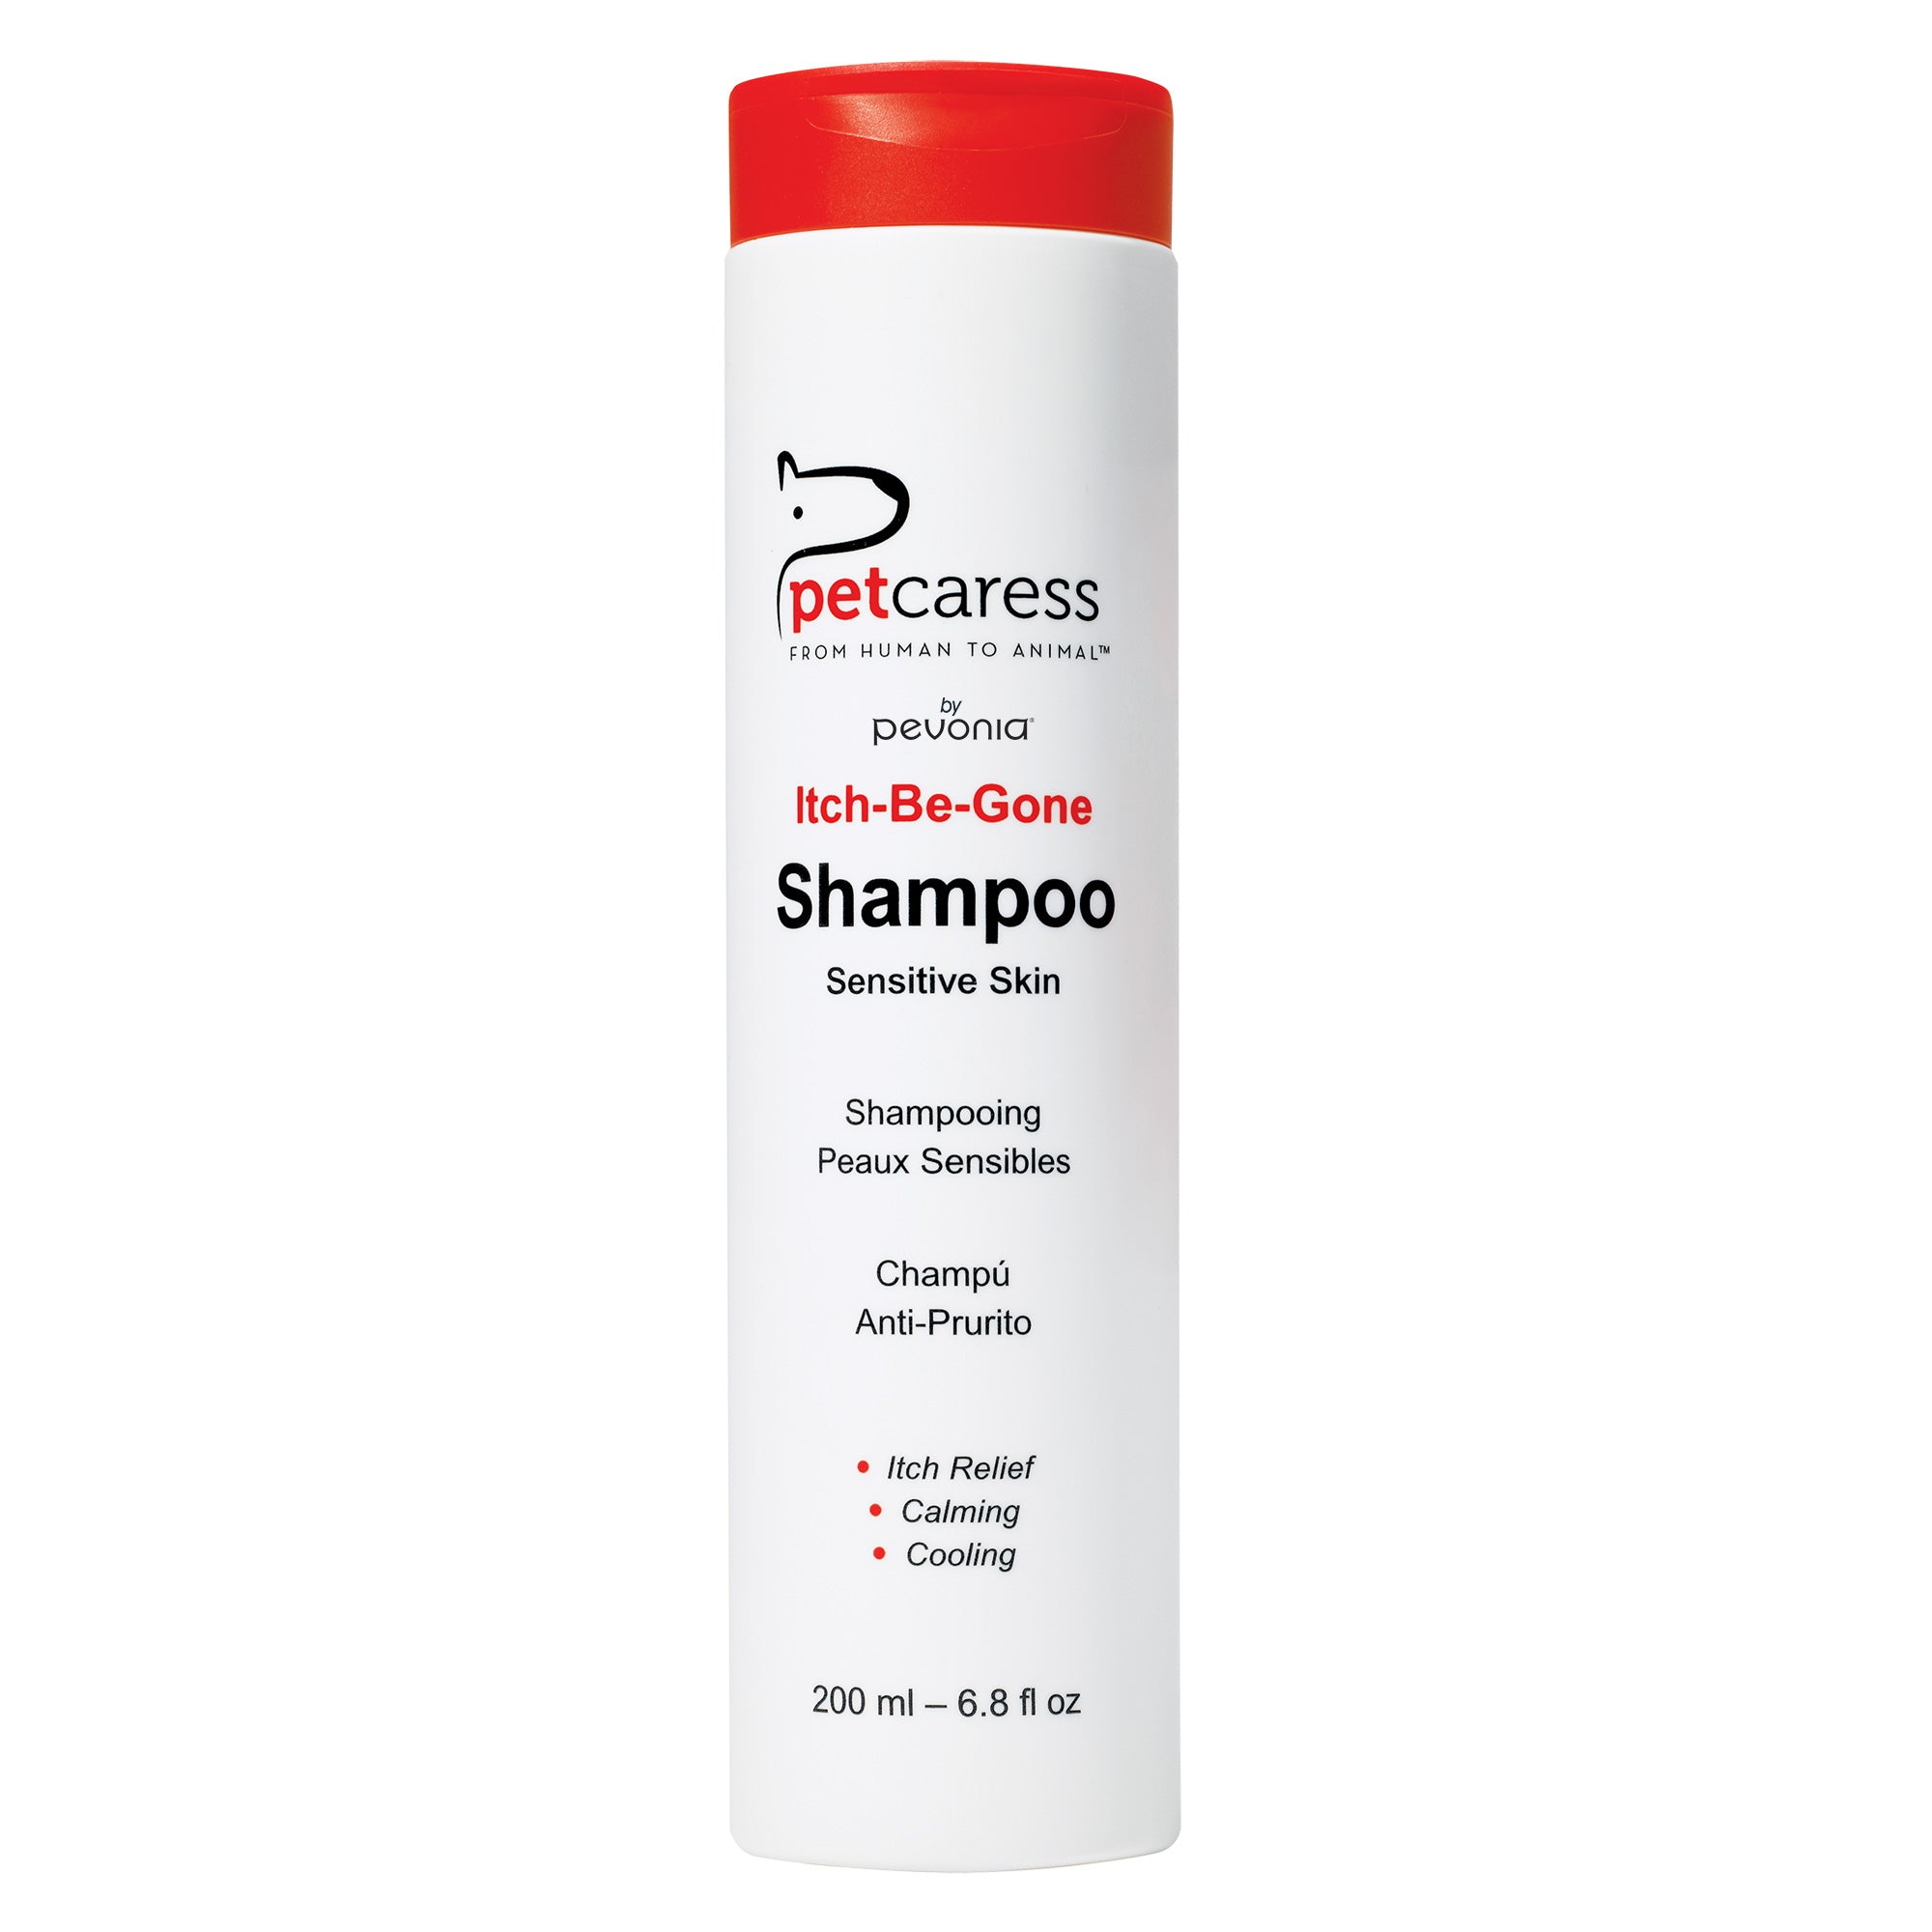 Itch-Be-Gone Shampoo - Sensitive Skin